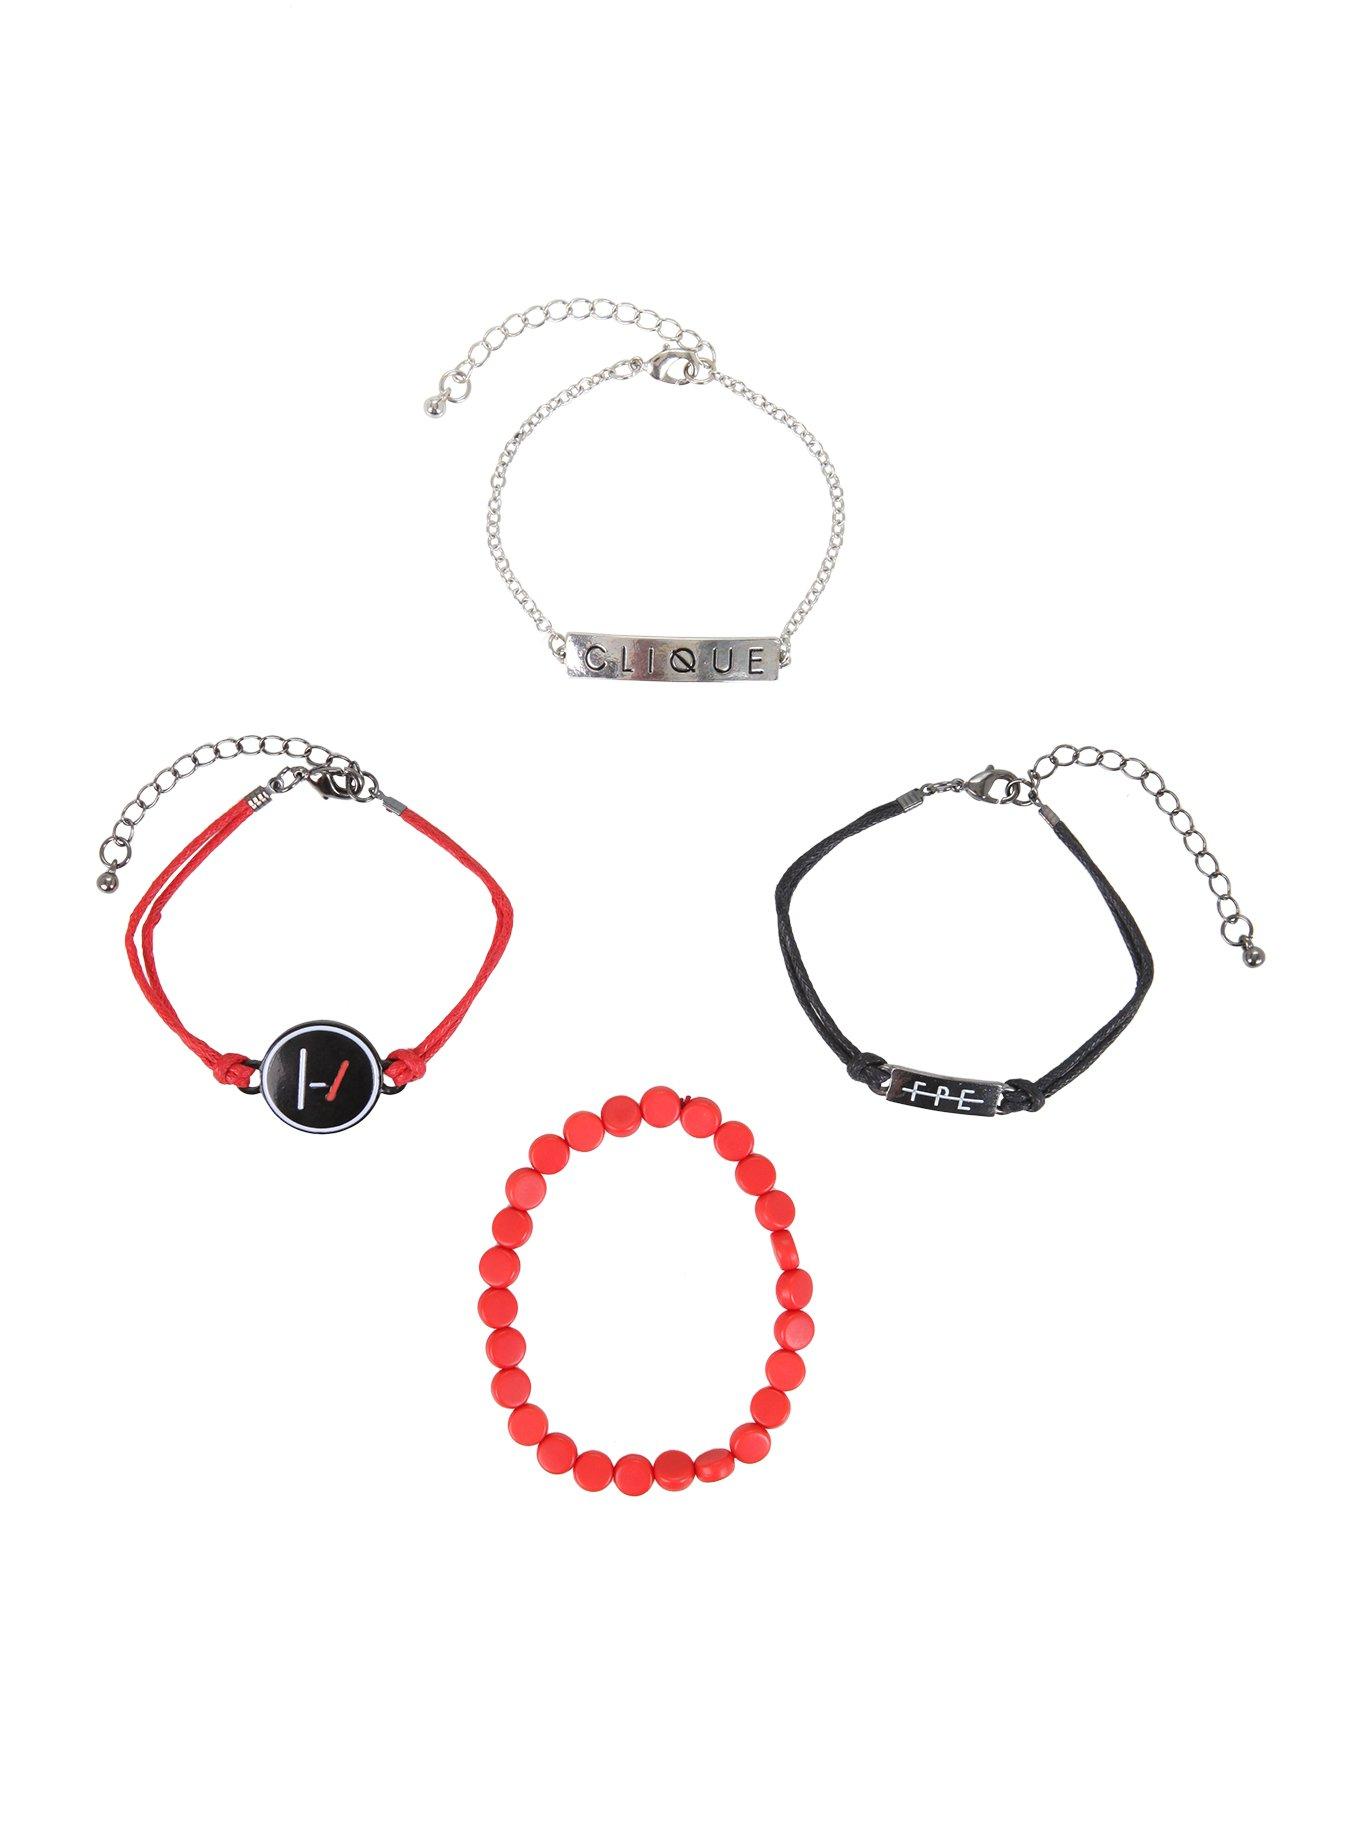 Twenty One Pilots Clique ID Bracelet Set | Hot Topic